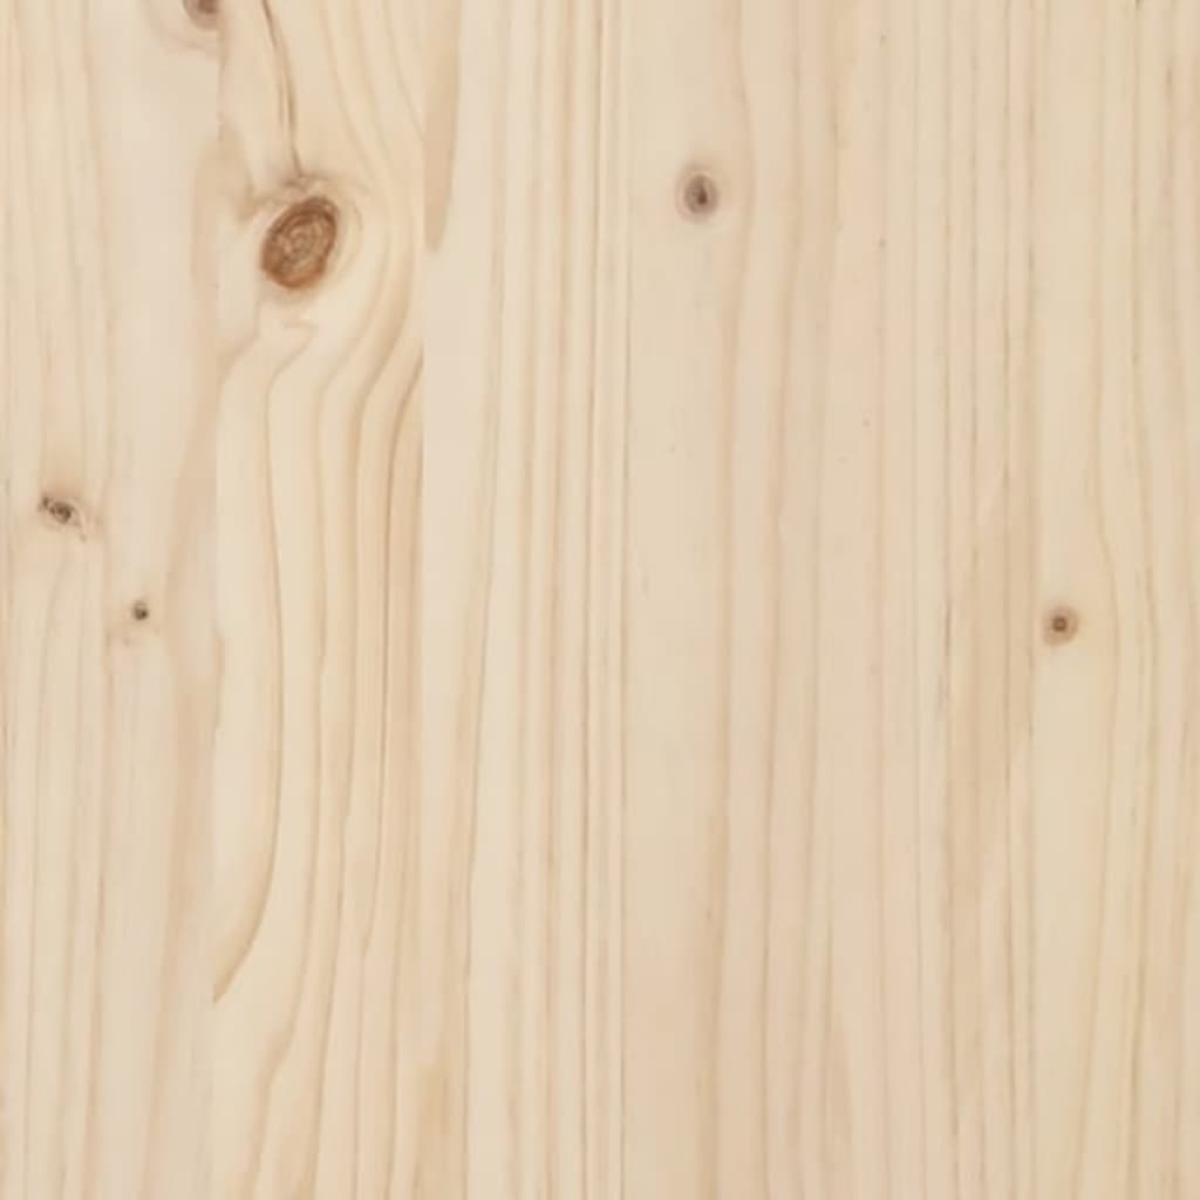 Estructura de cama de madera maciza 100x200 cm